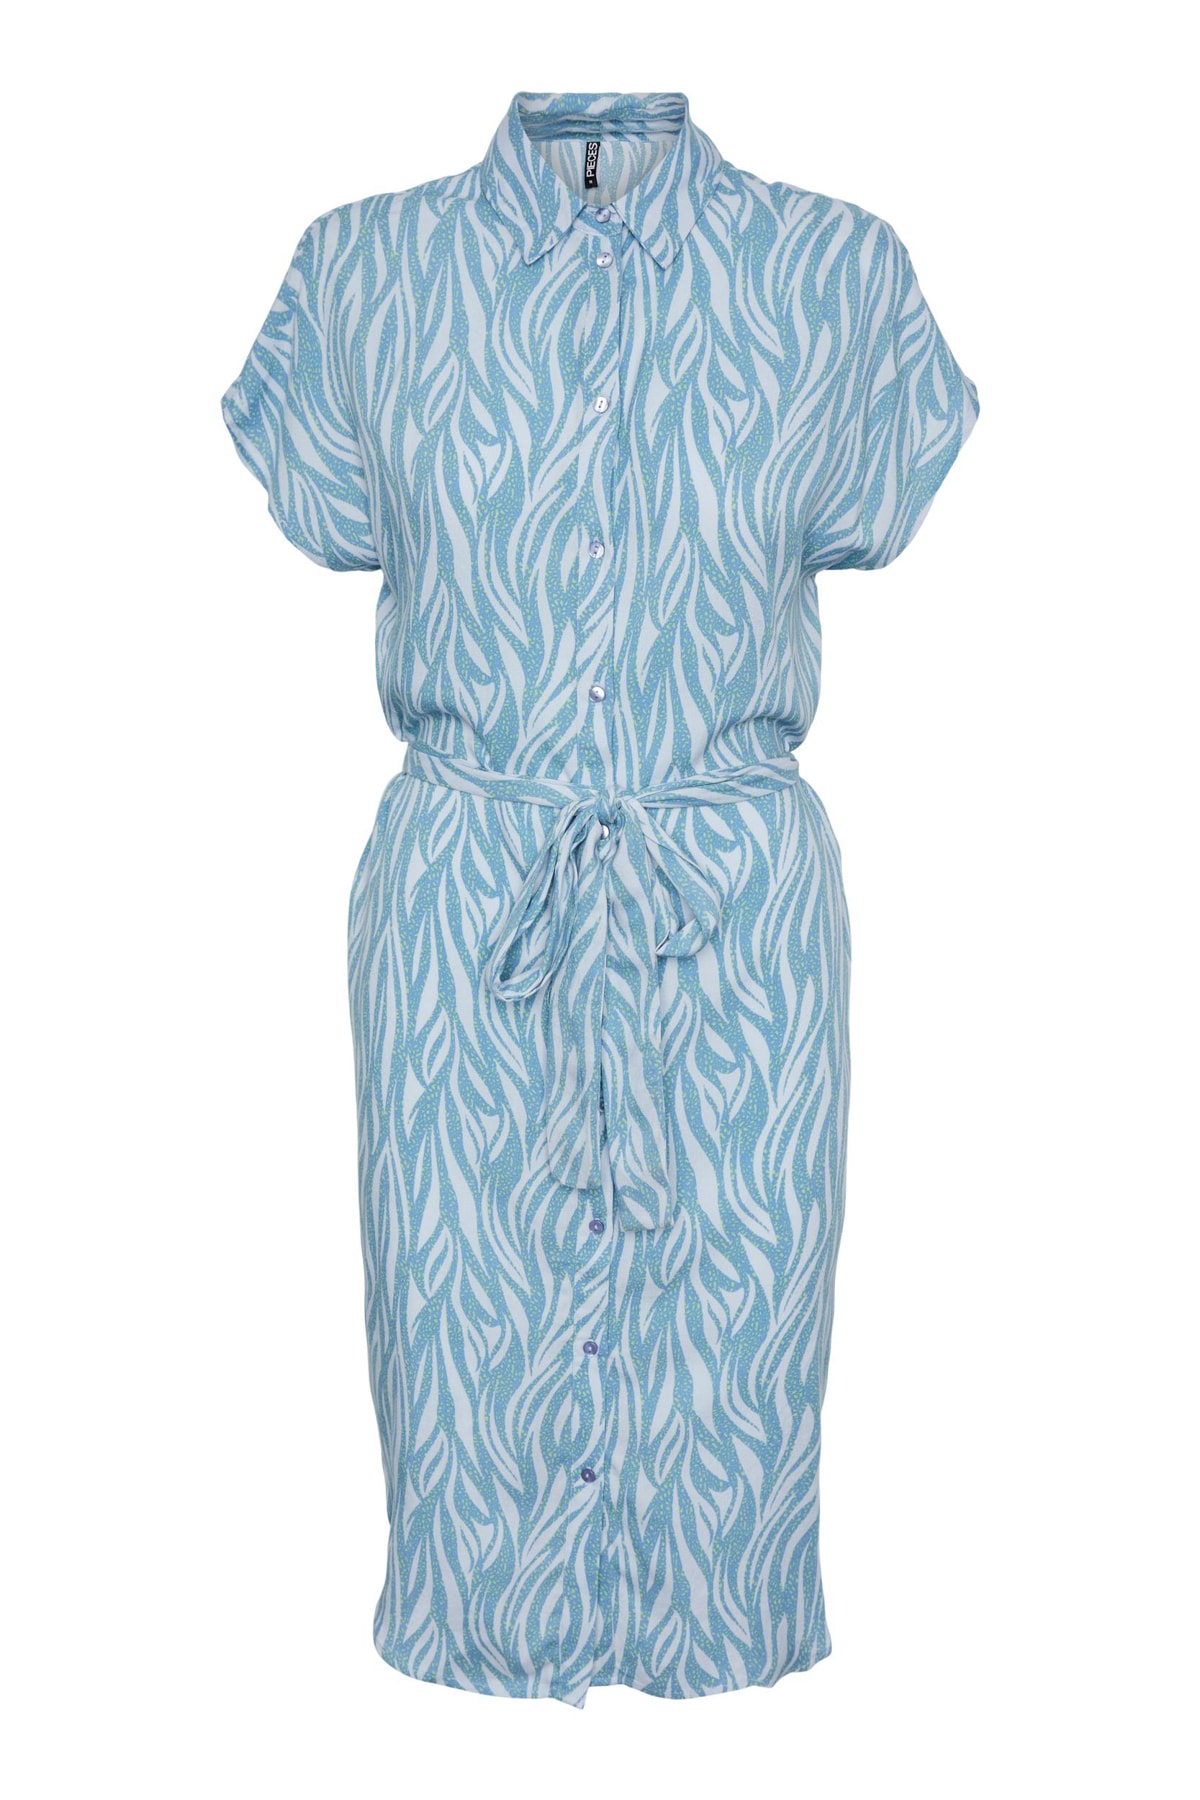 PIECES Kleid Blau Blusenkleid Fast ausverkauft FN7712